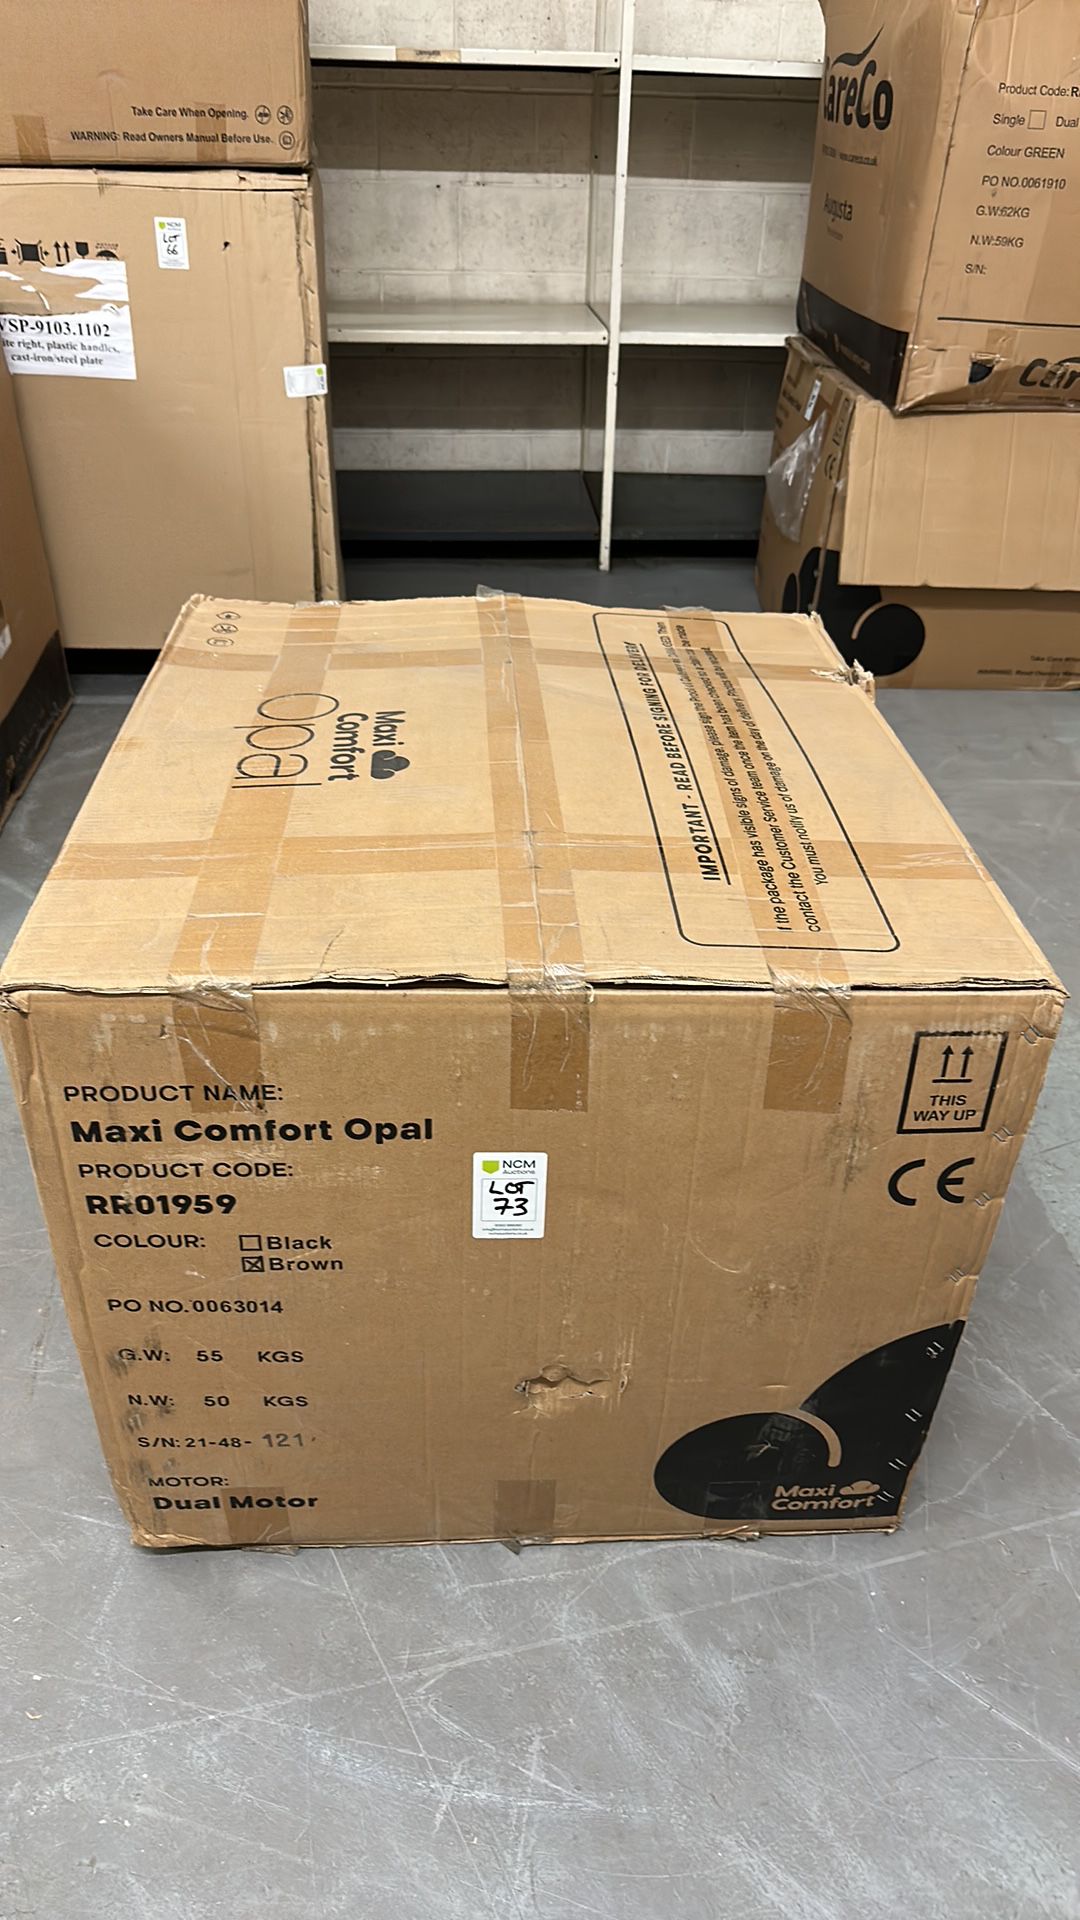 Maxi Comfort Opal - Dual Motor